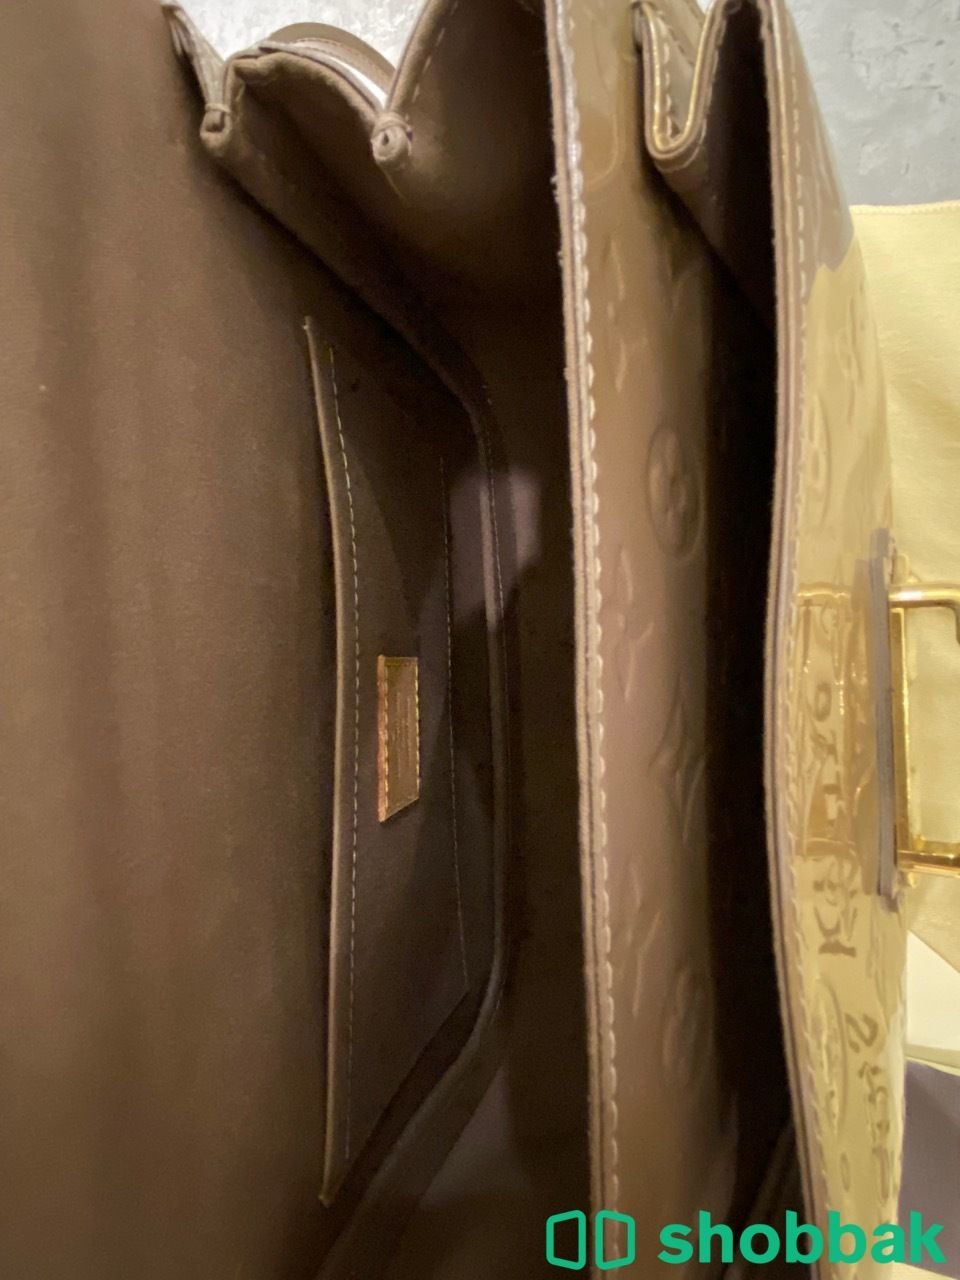 LV - Louis Vuitton Bag - شنطة لويس فيتون Shobbak Saudi Arabia